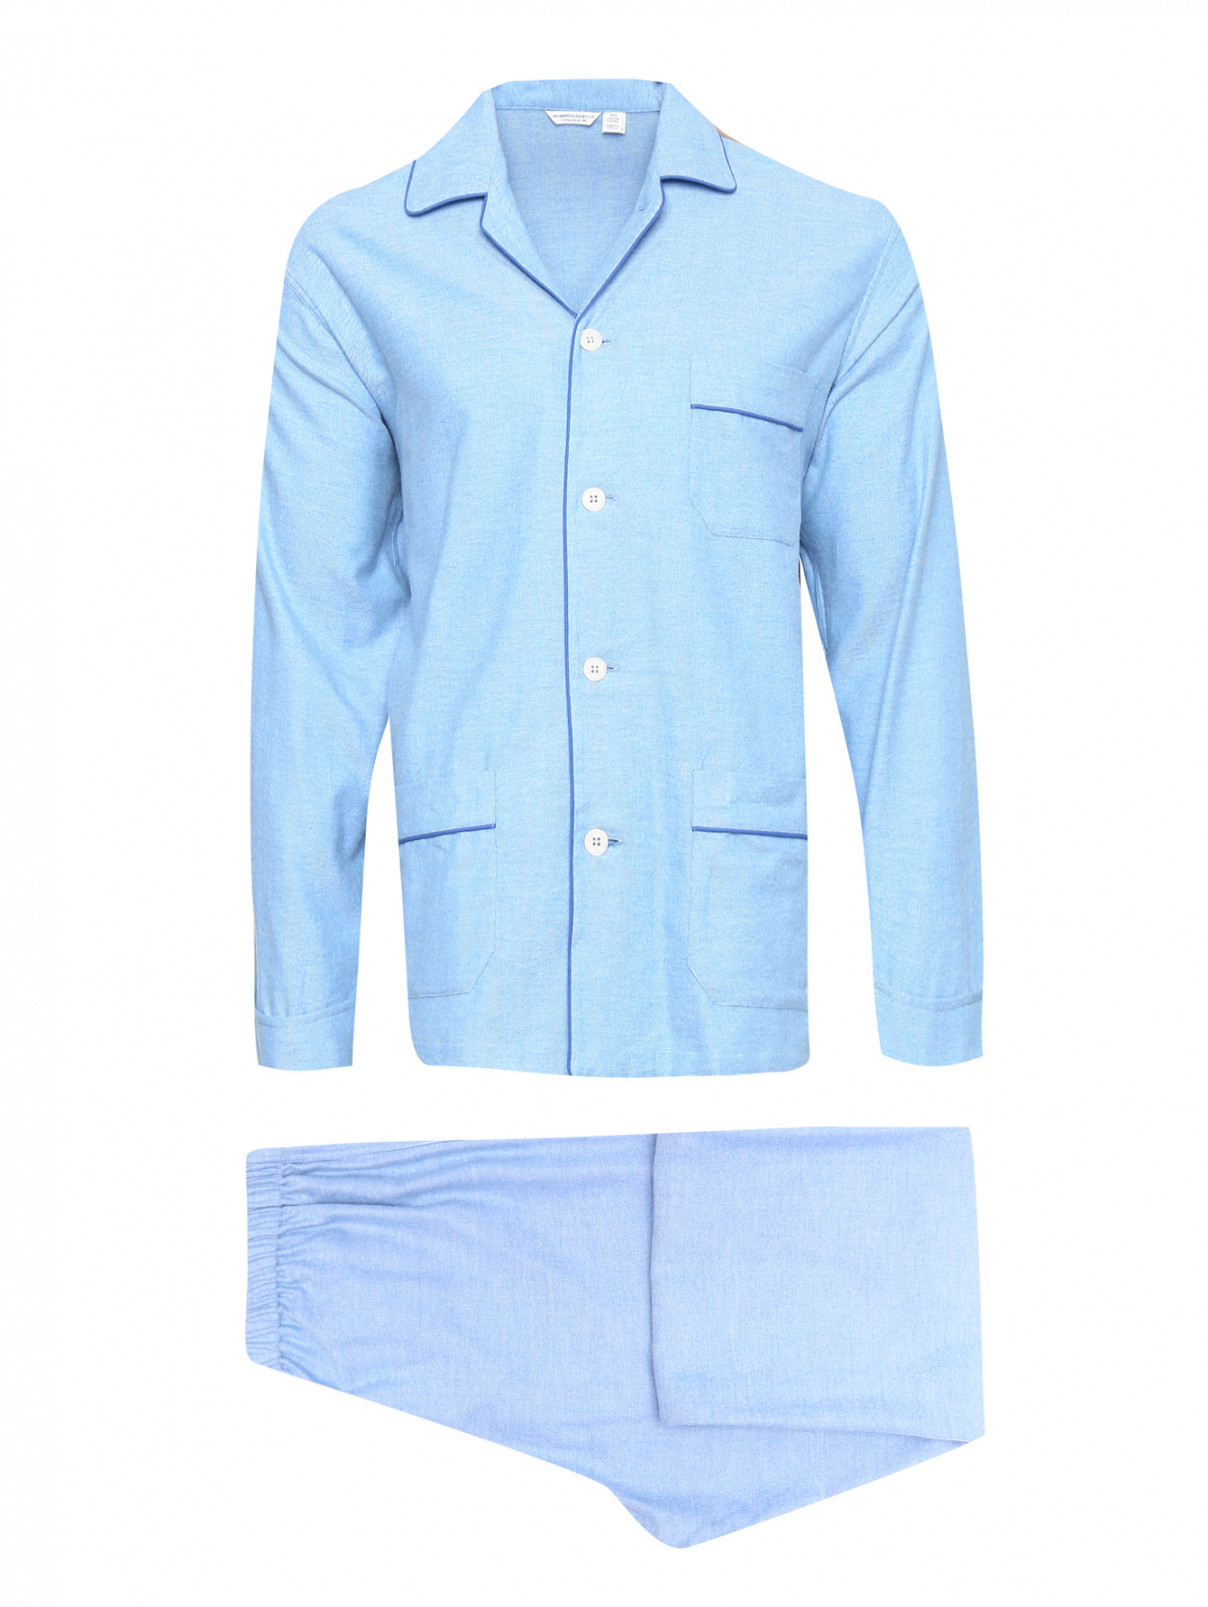 Пижама из хлопка с накладными карманами Roberto Ricetti  –  Общий вид  – Цвет:  Синий